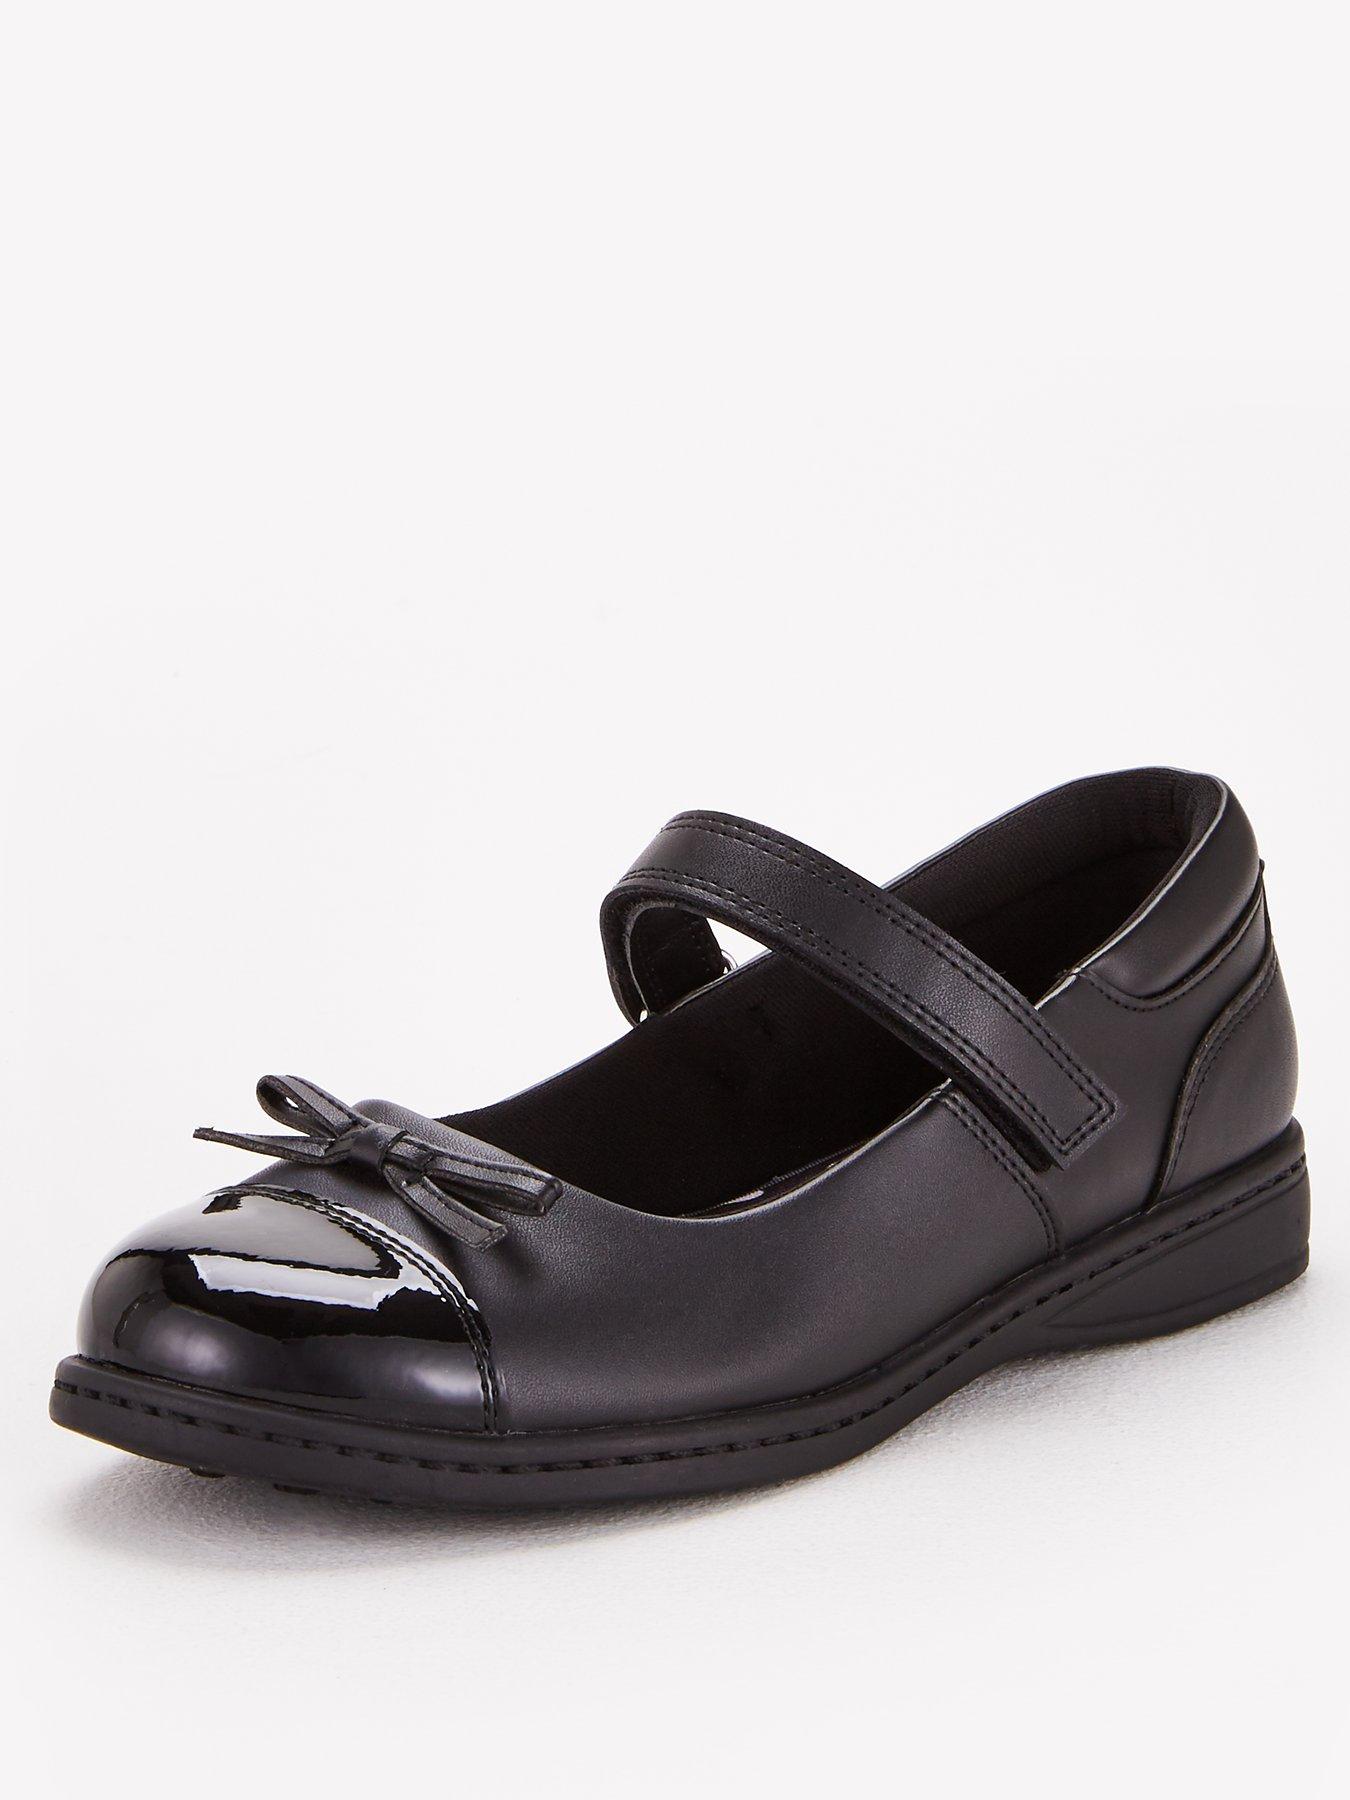 V by Very Girls Mary Jane Leather School Shoe - Black | very.co.uk